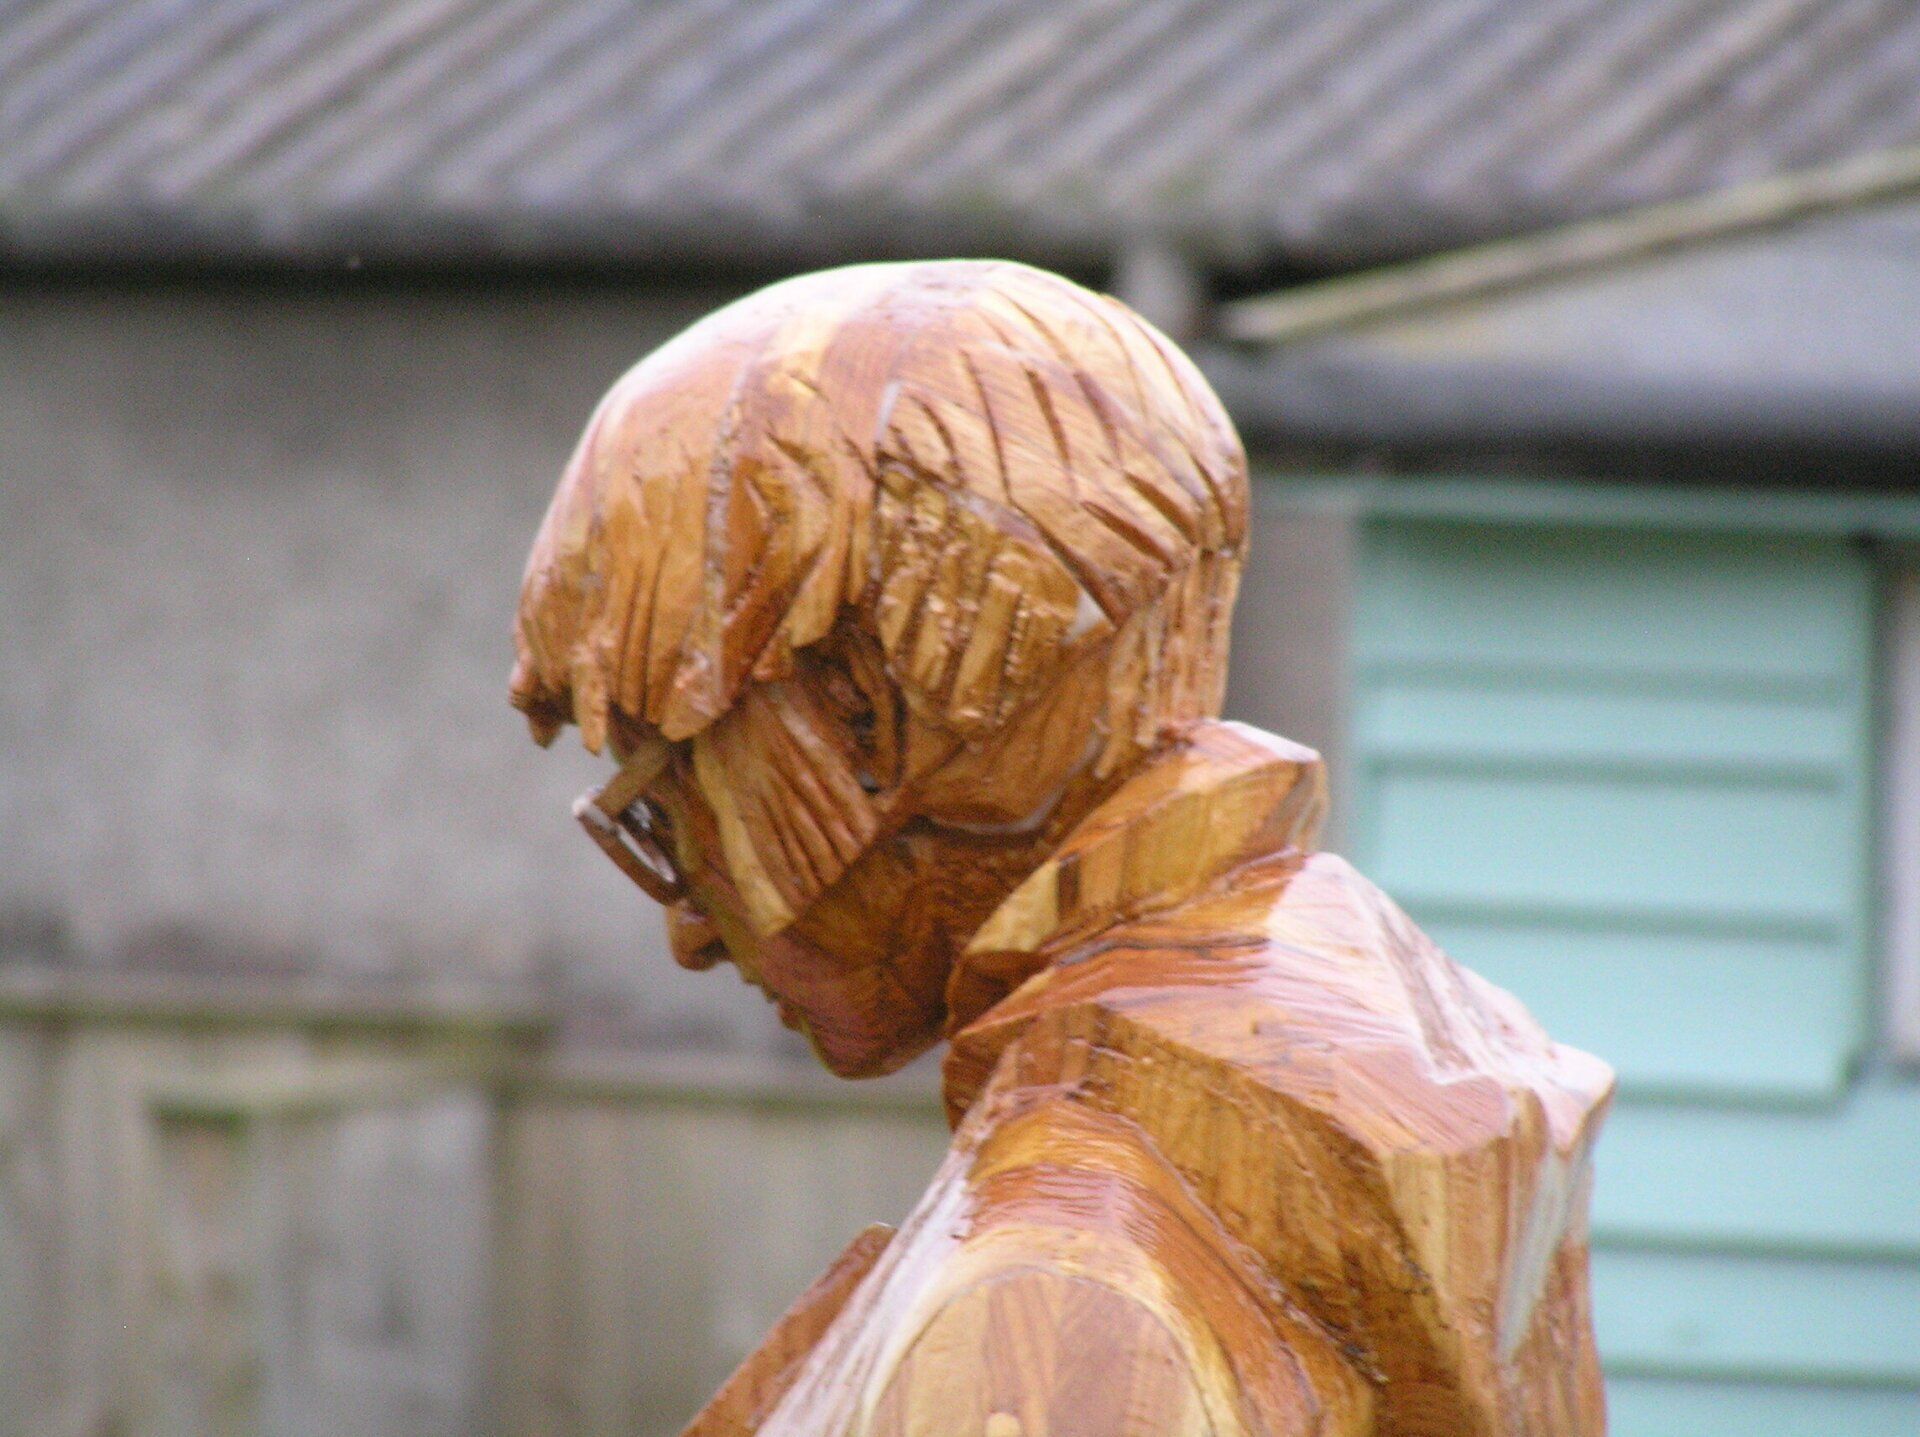 British handmade figurative sculpture